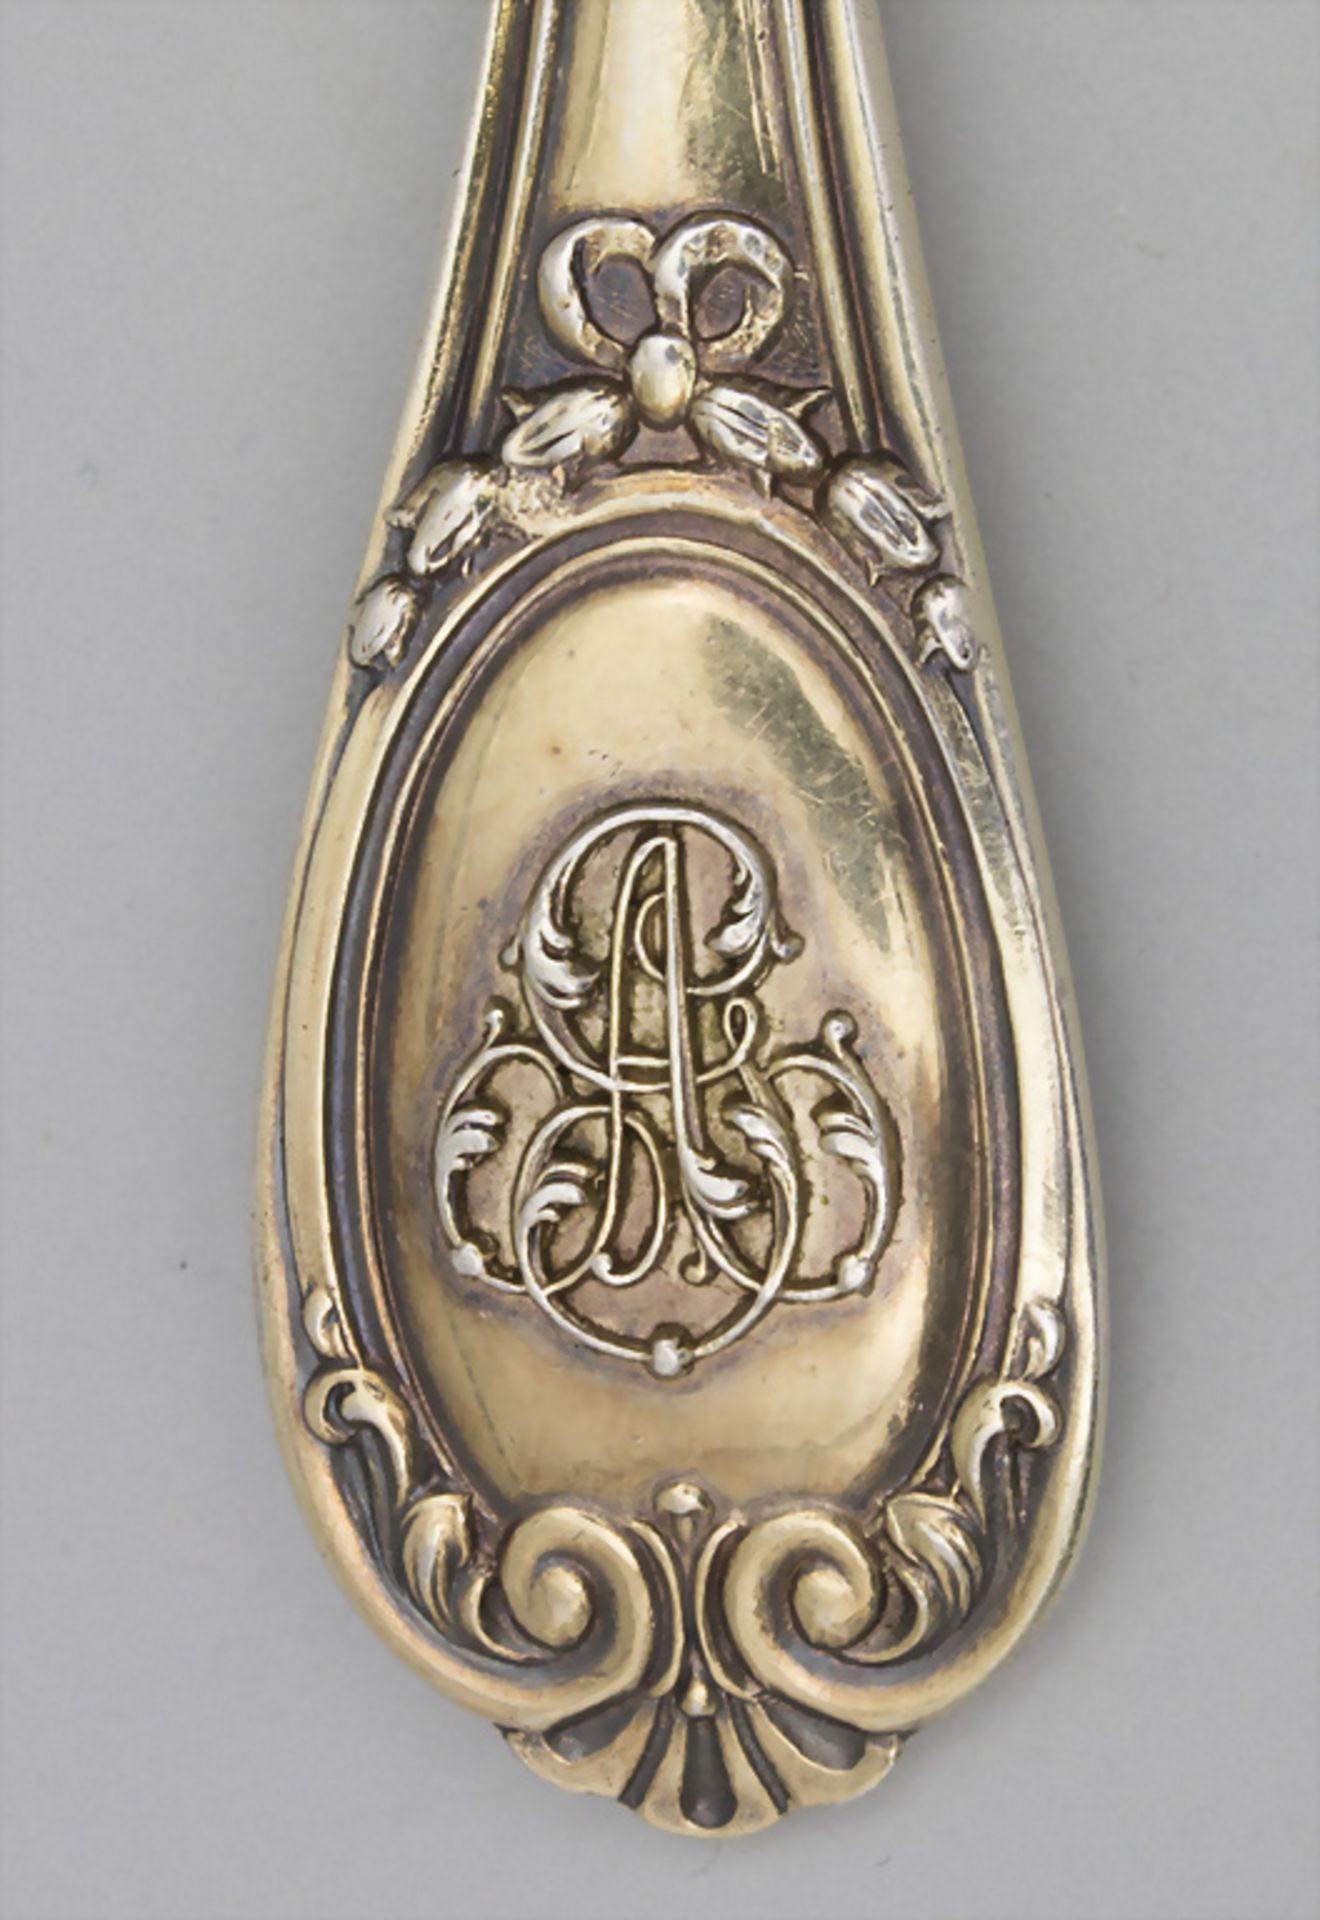 12-teiliges Silberbesteck / A 12-part silver cutlery, Veyrat, Paris, um 1900 - Image 5 of 8